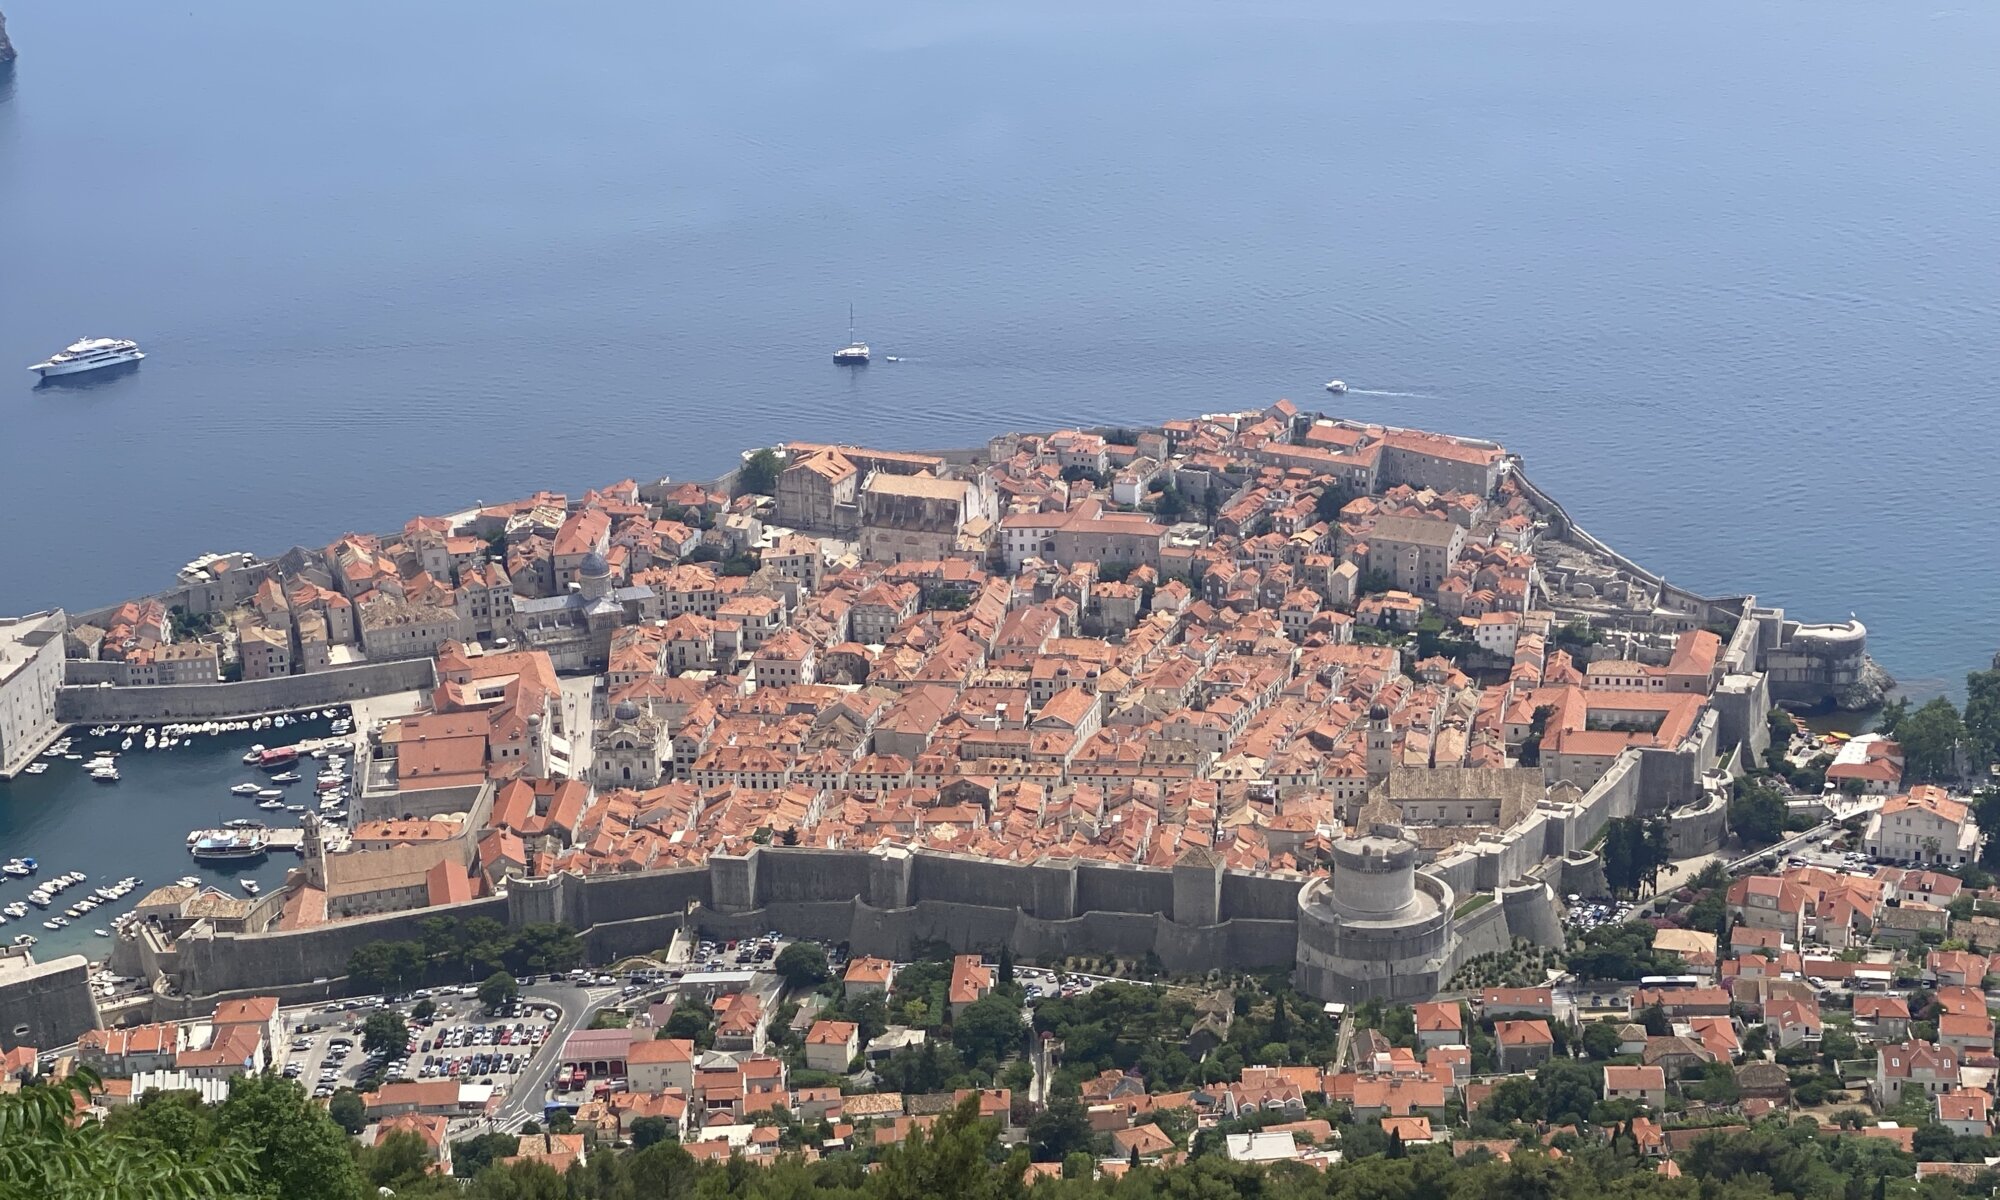 Old town, Dubrovnik